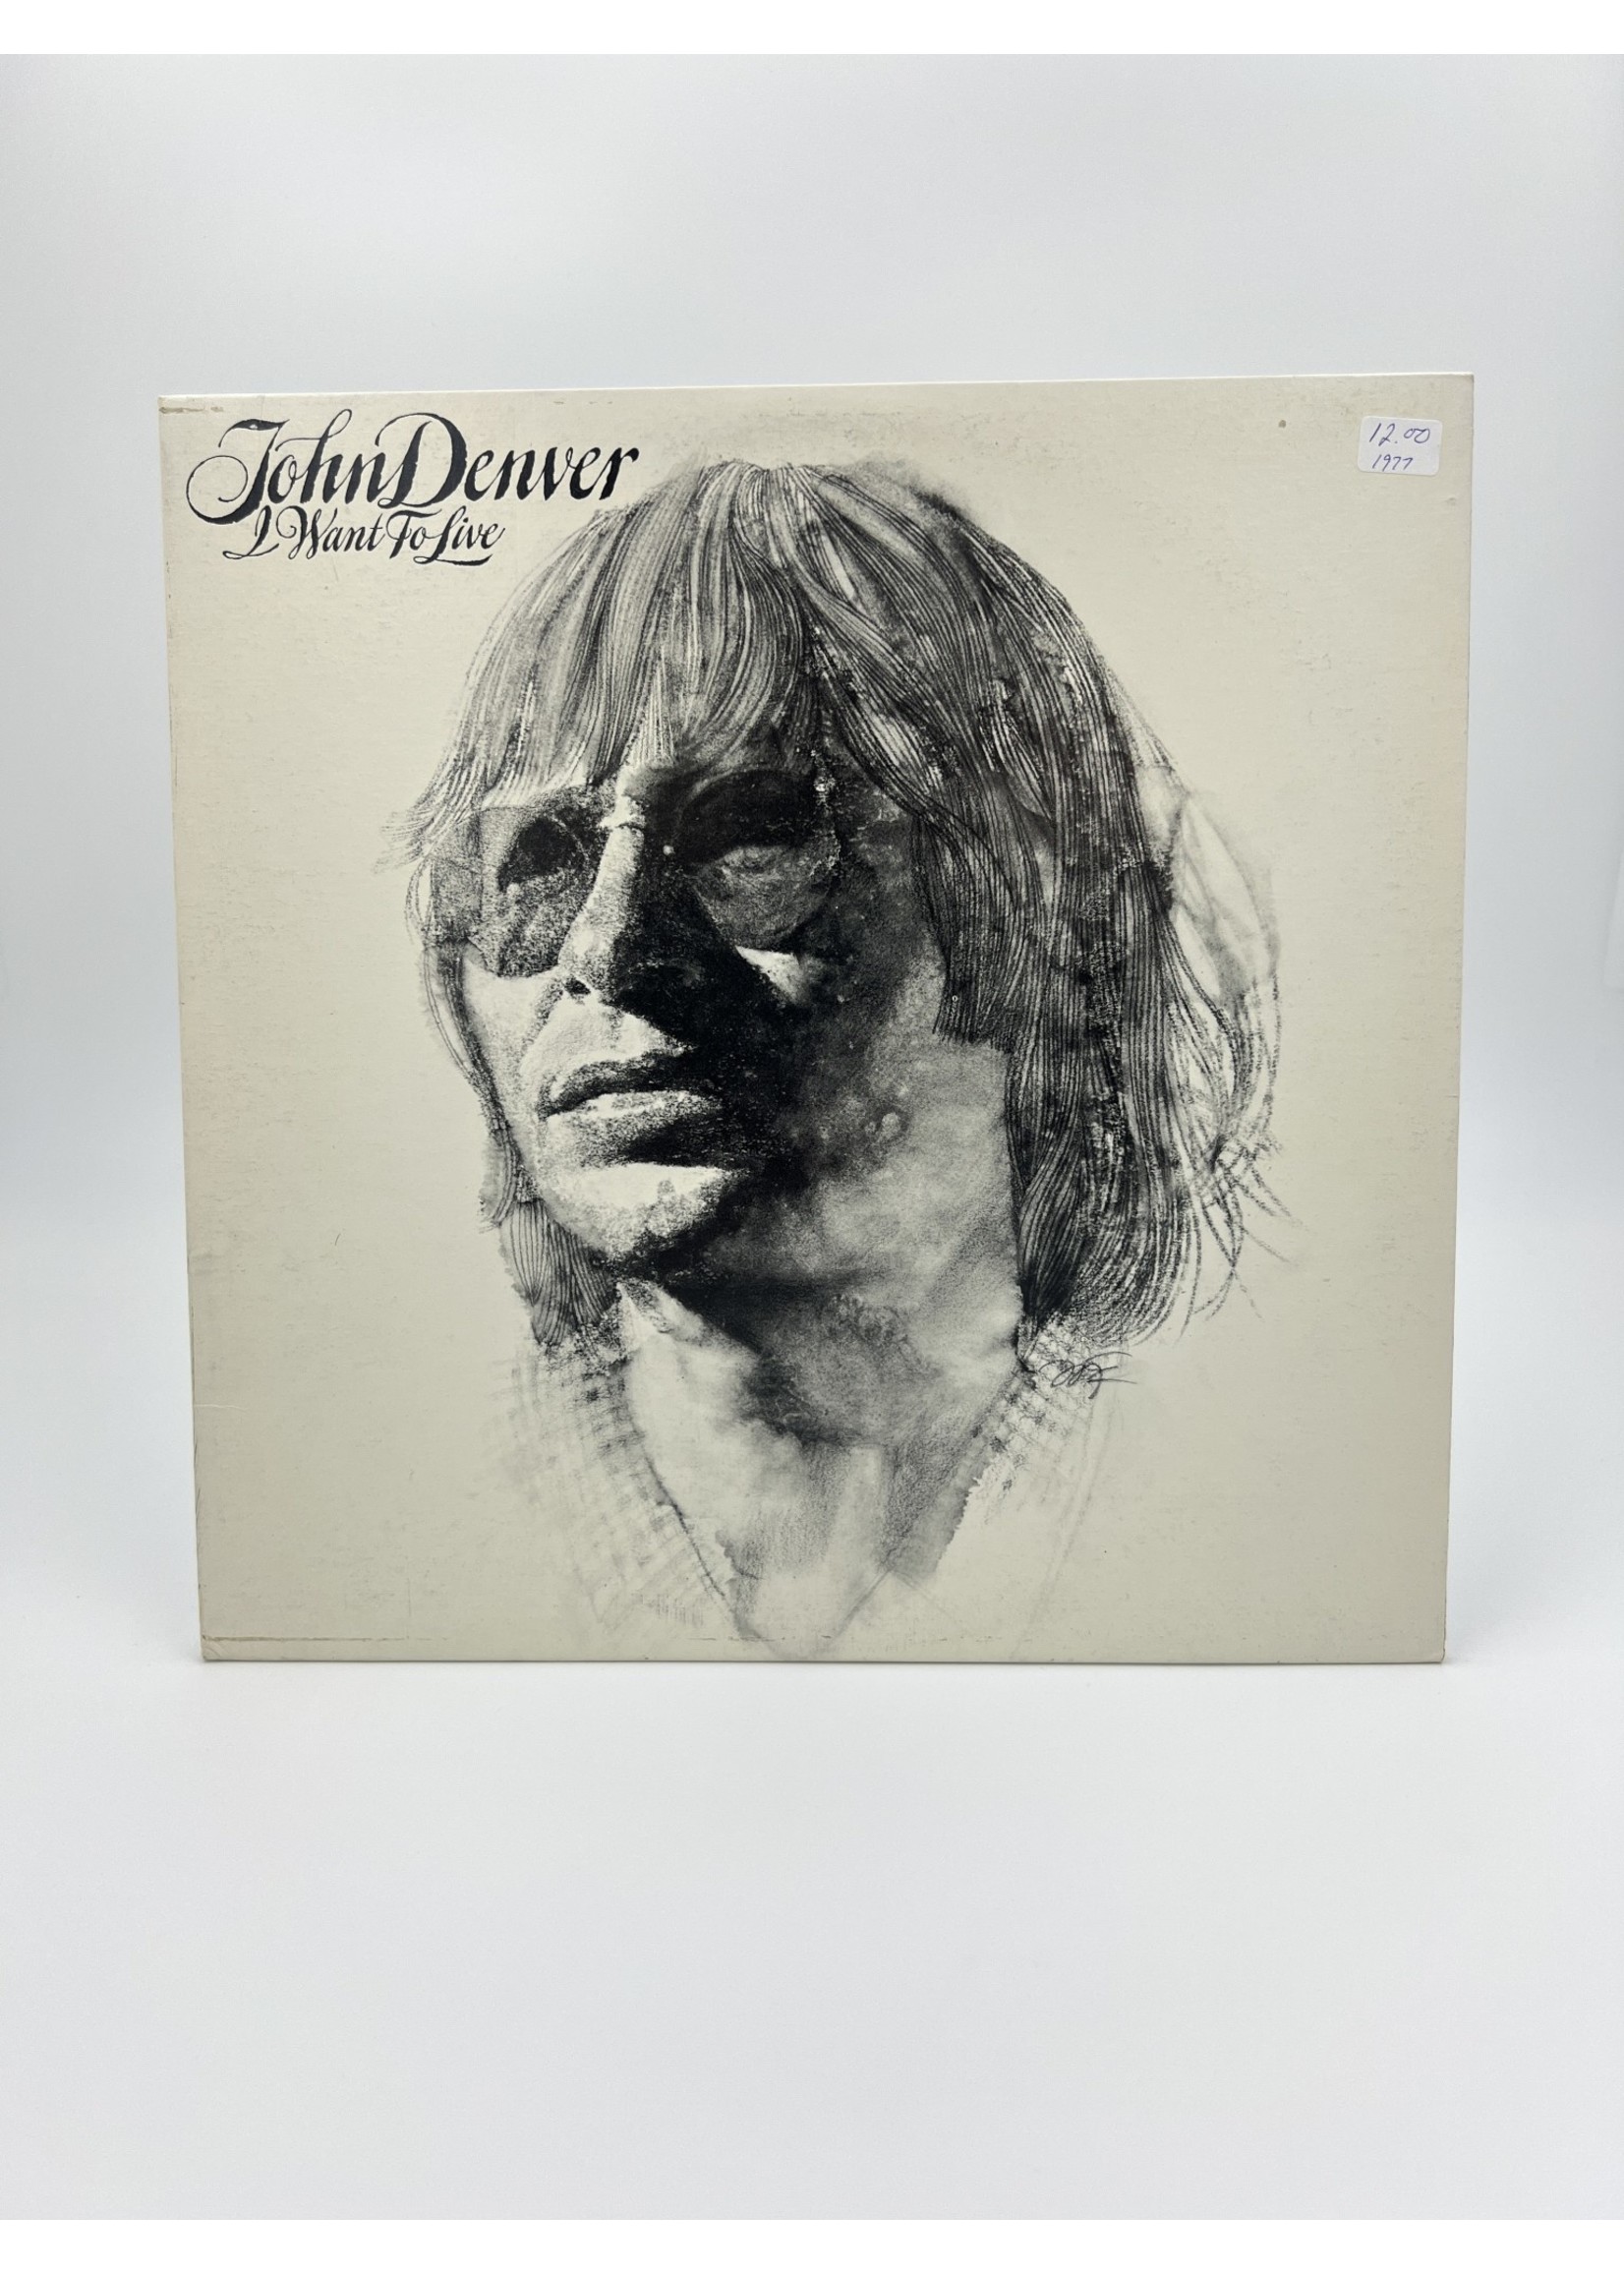 LP John Denver I Want To Live Lp Record